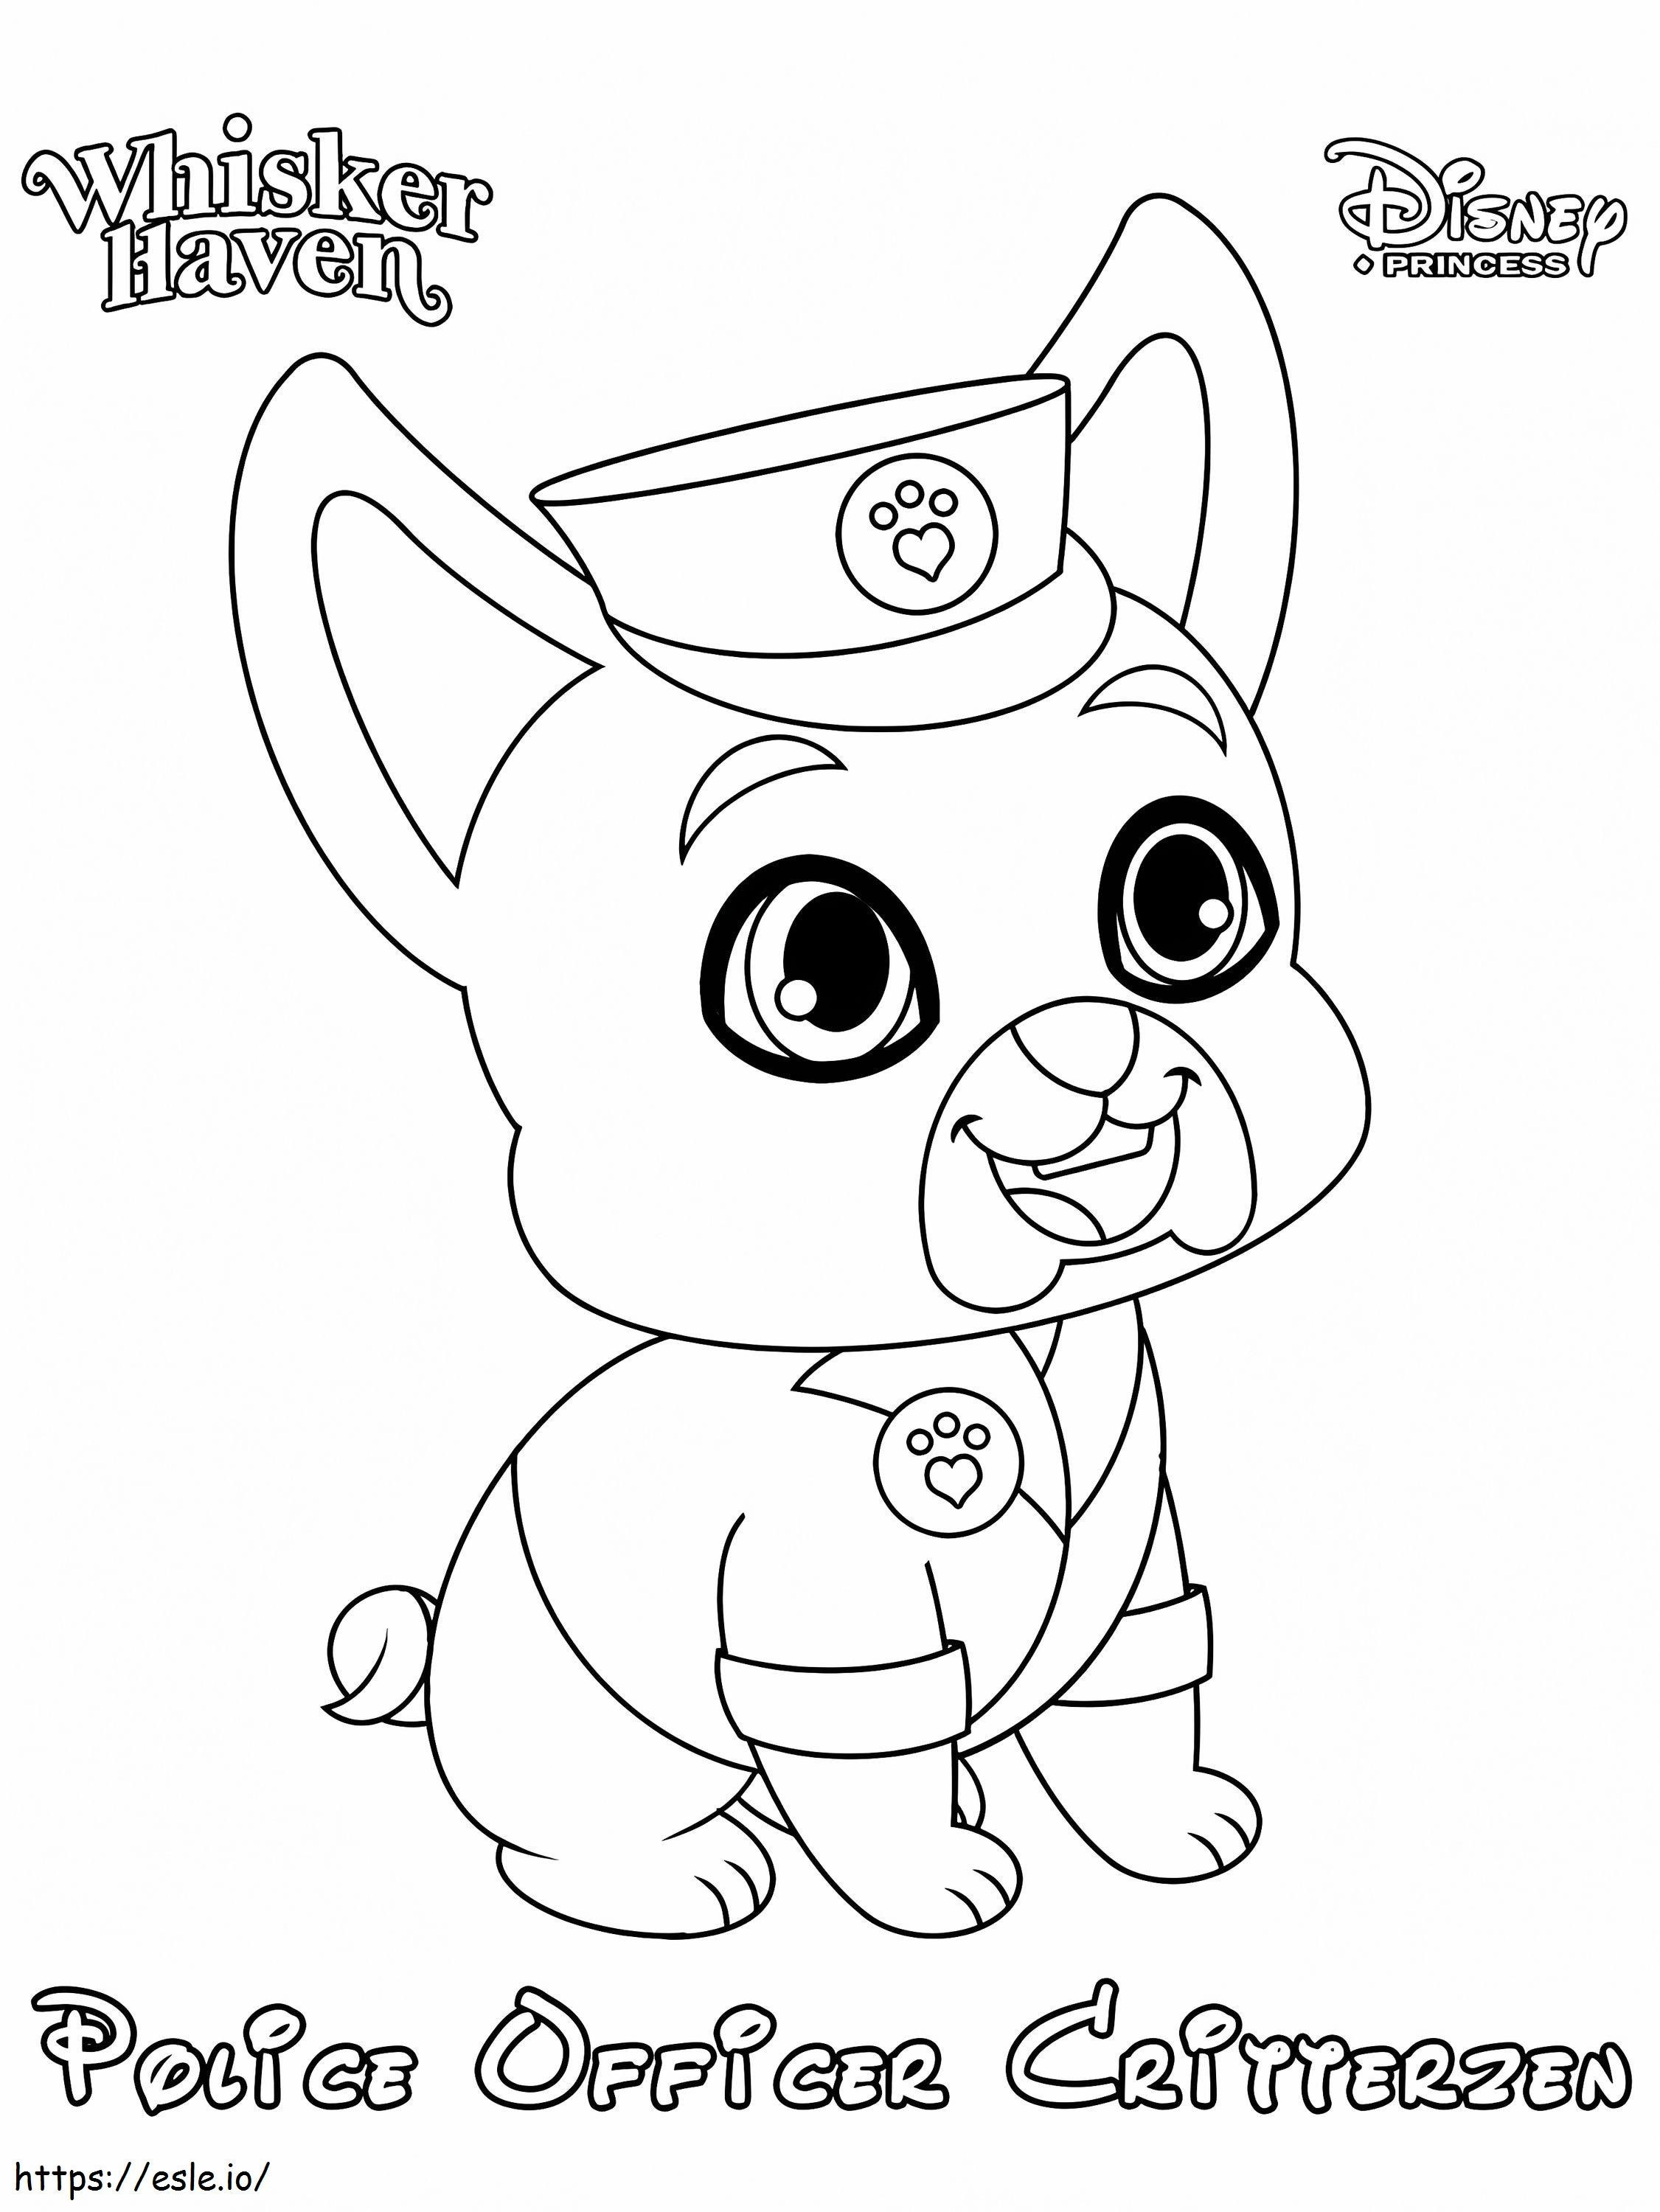  Whisker Haven Policial Critterzen Princess Palace Pet para colorir